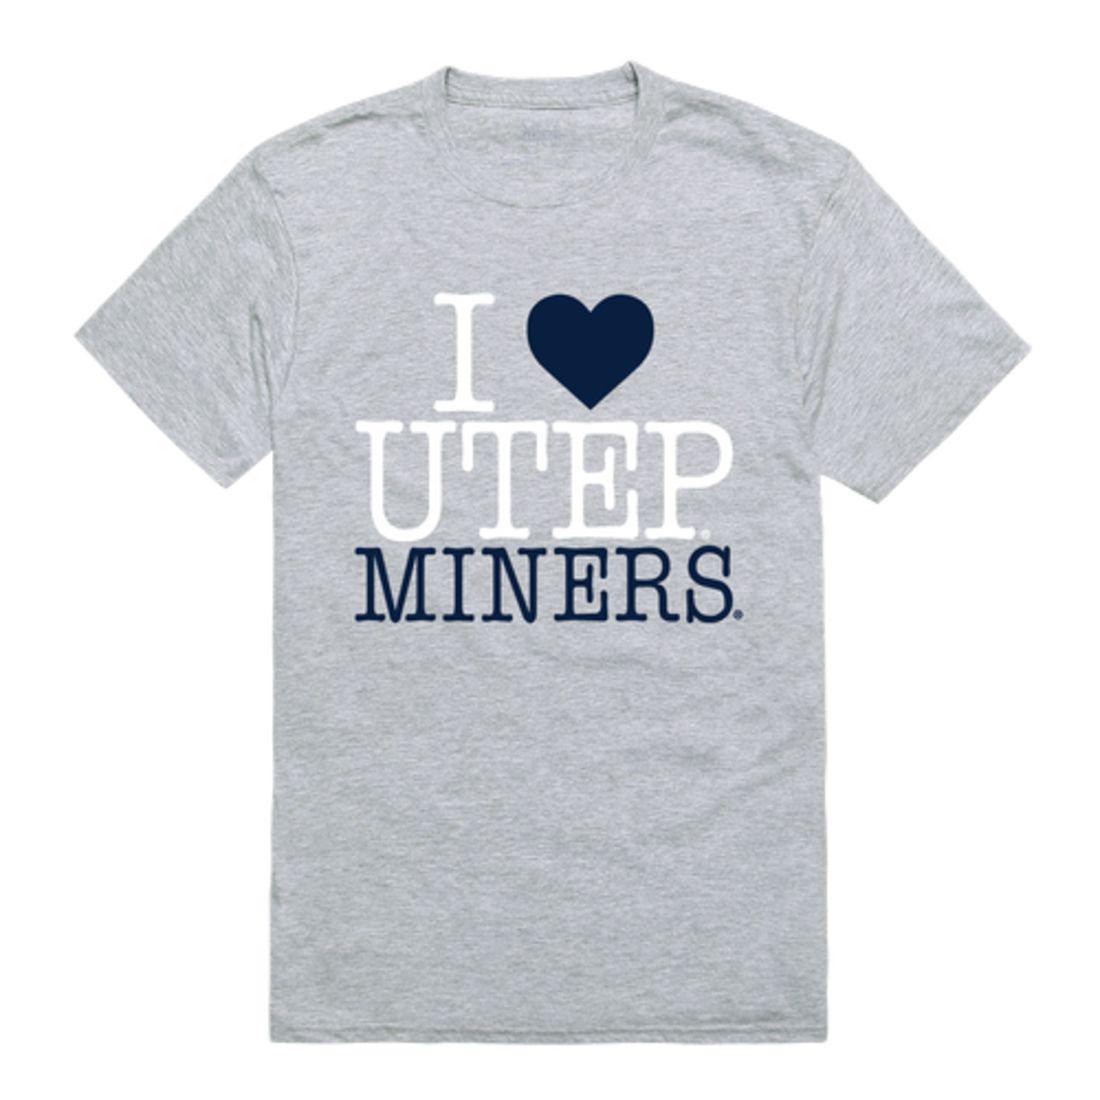 I Love UTEP University of Texas at El Paso Miners T-Shirt-Campus-Wardrobe